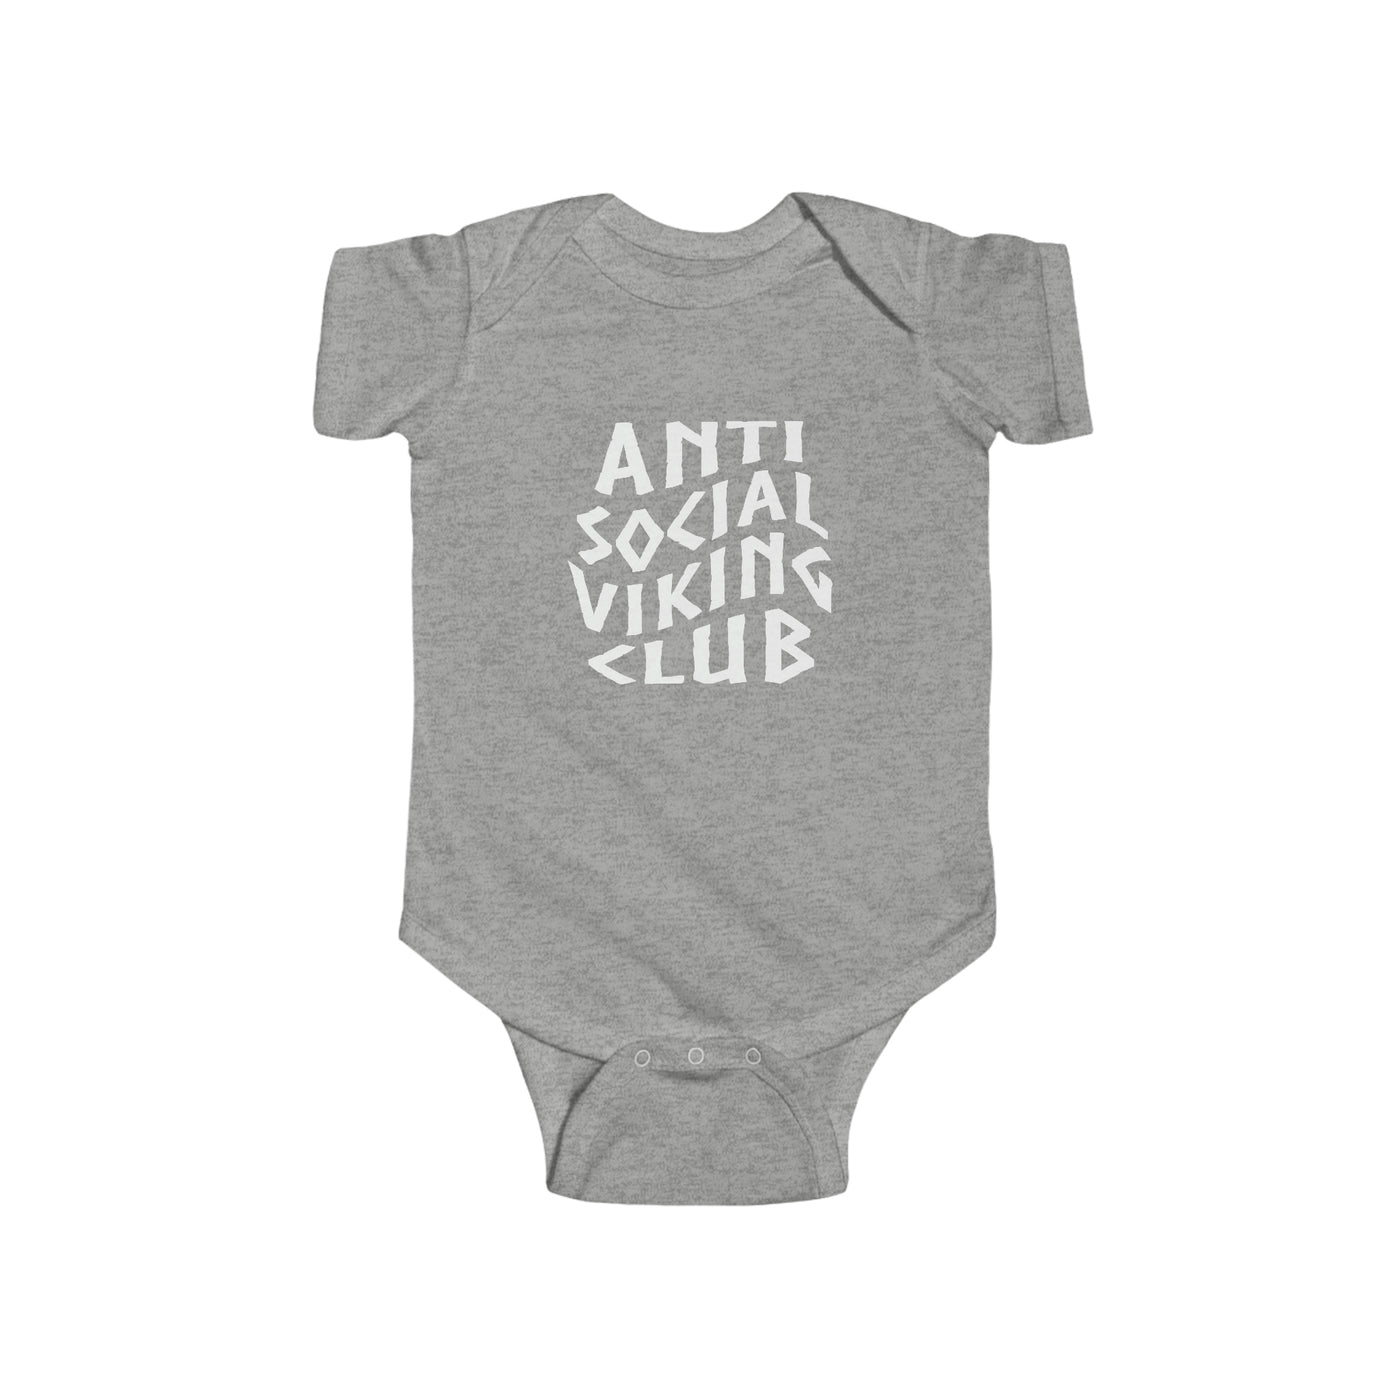 Anti Social Viking Club Baby Bodysuit